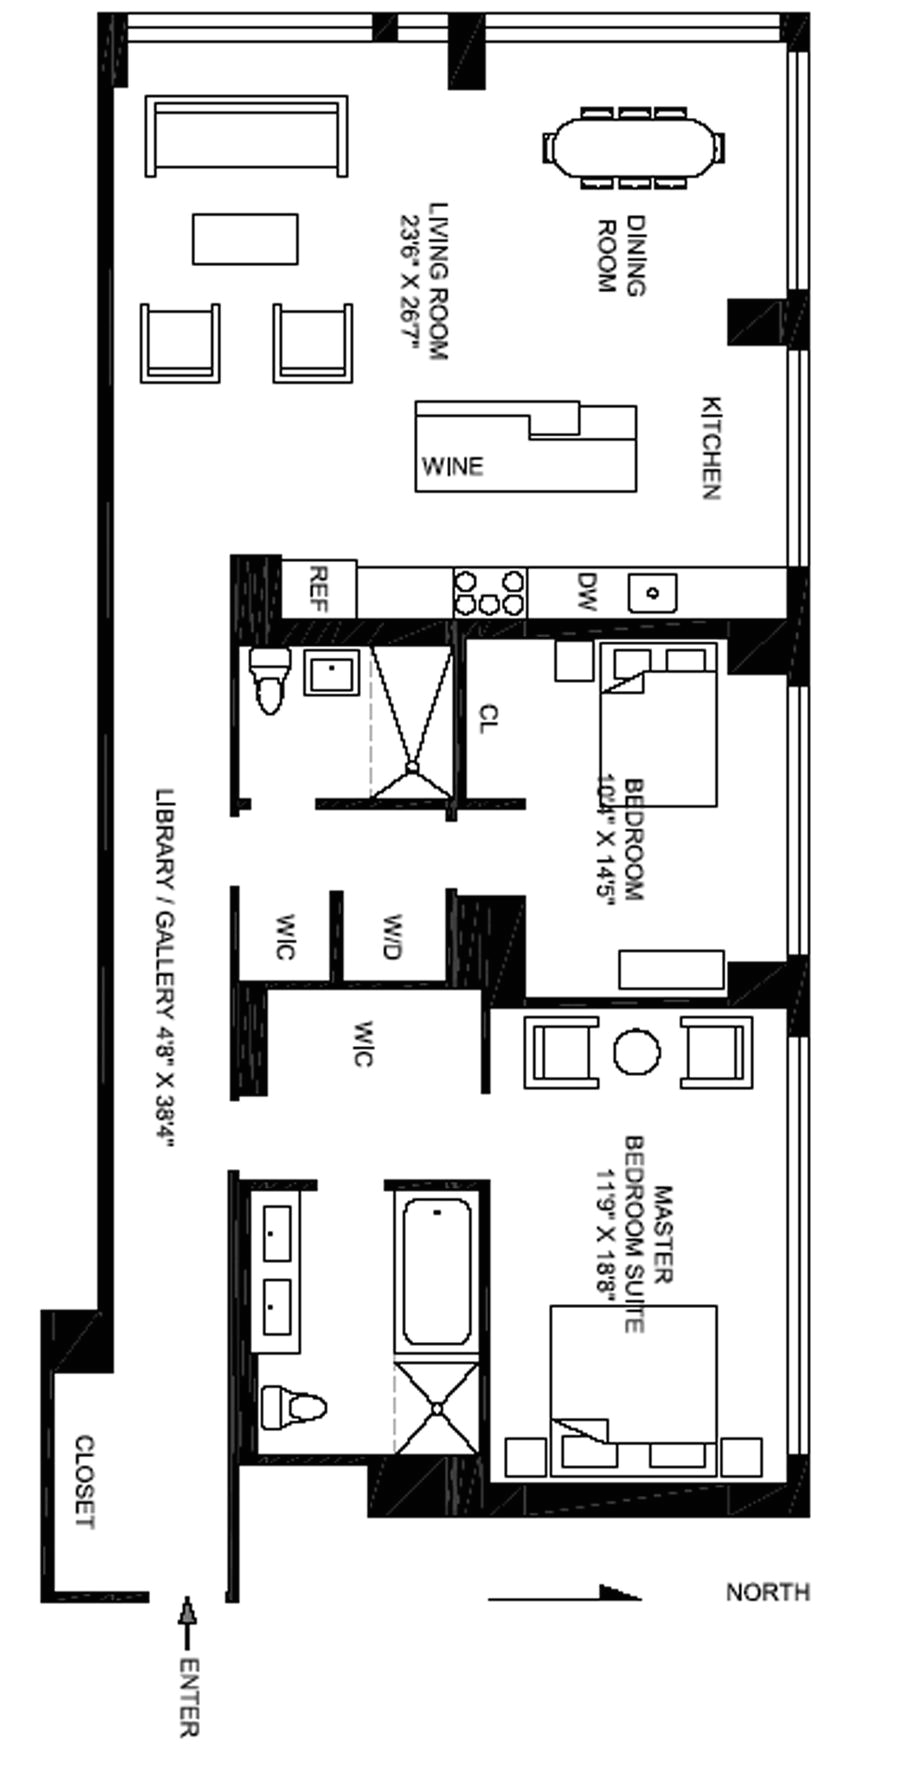 x house plans ranch style with basements marvelous idea homes zone plan duplex square 20 40